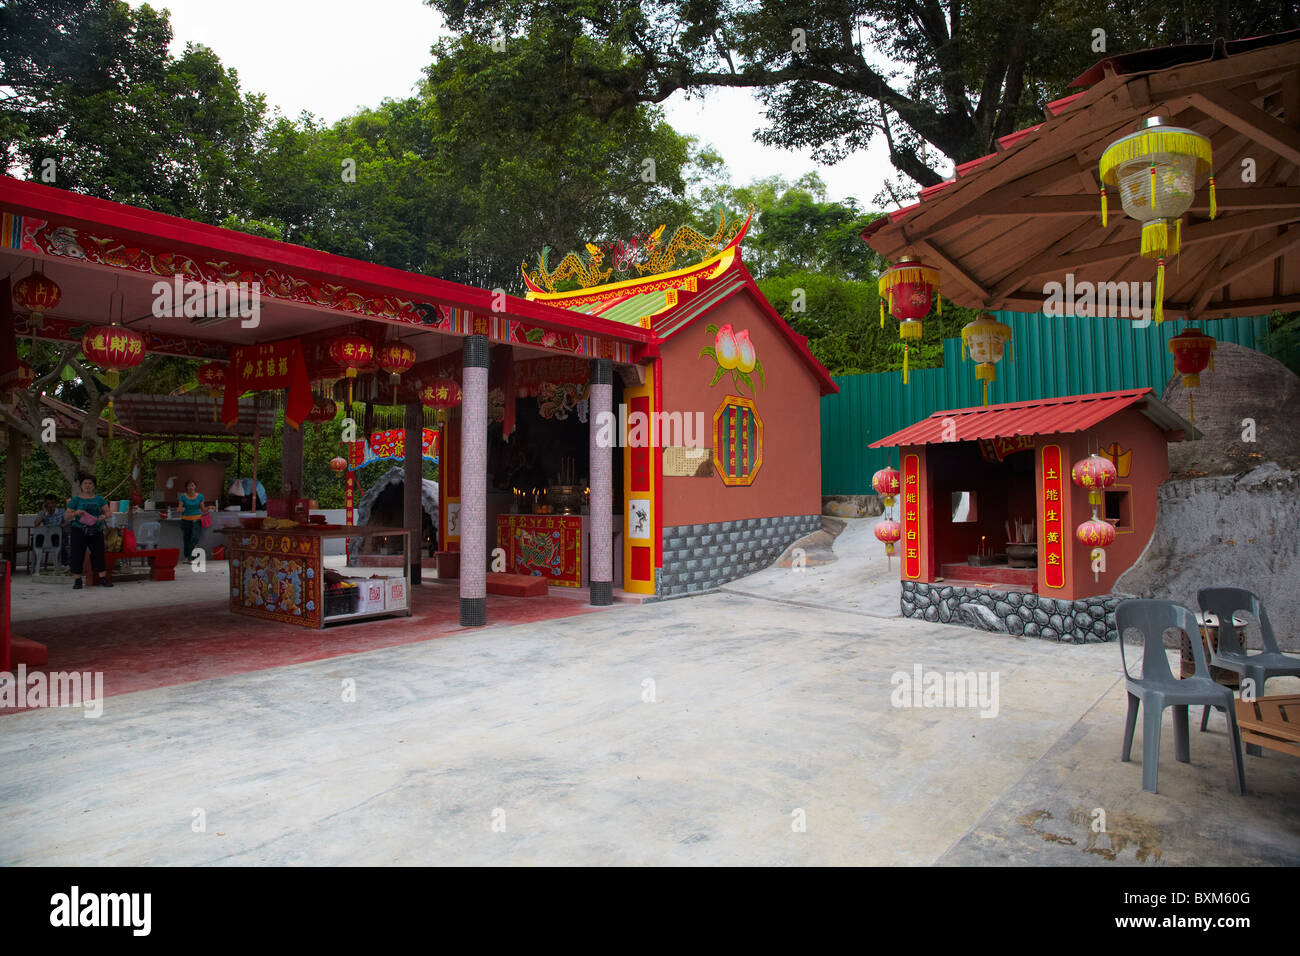 Fo Shan Ting da Bo Gong Temple, Pulau Ubin, Singapour Banque D'Images